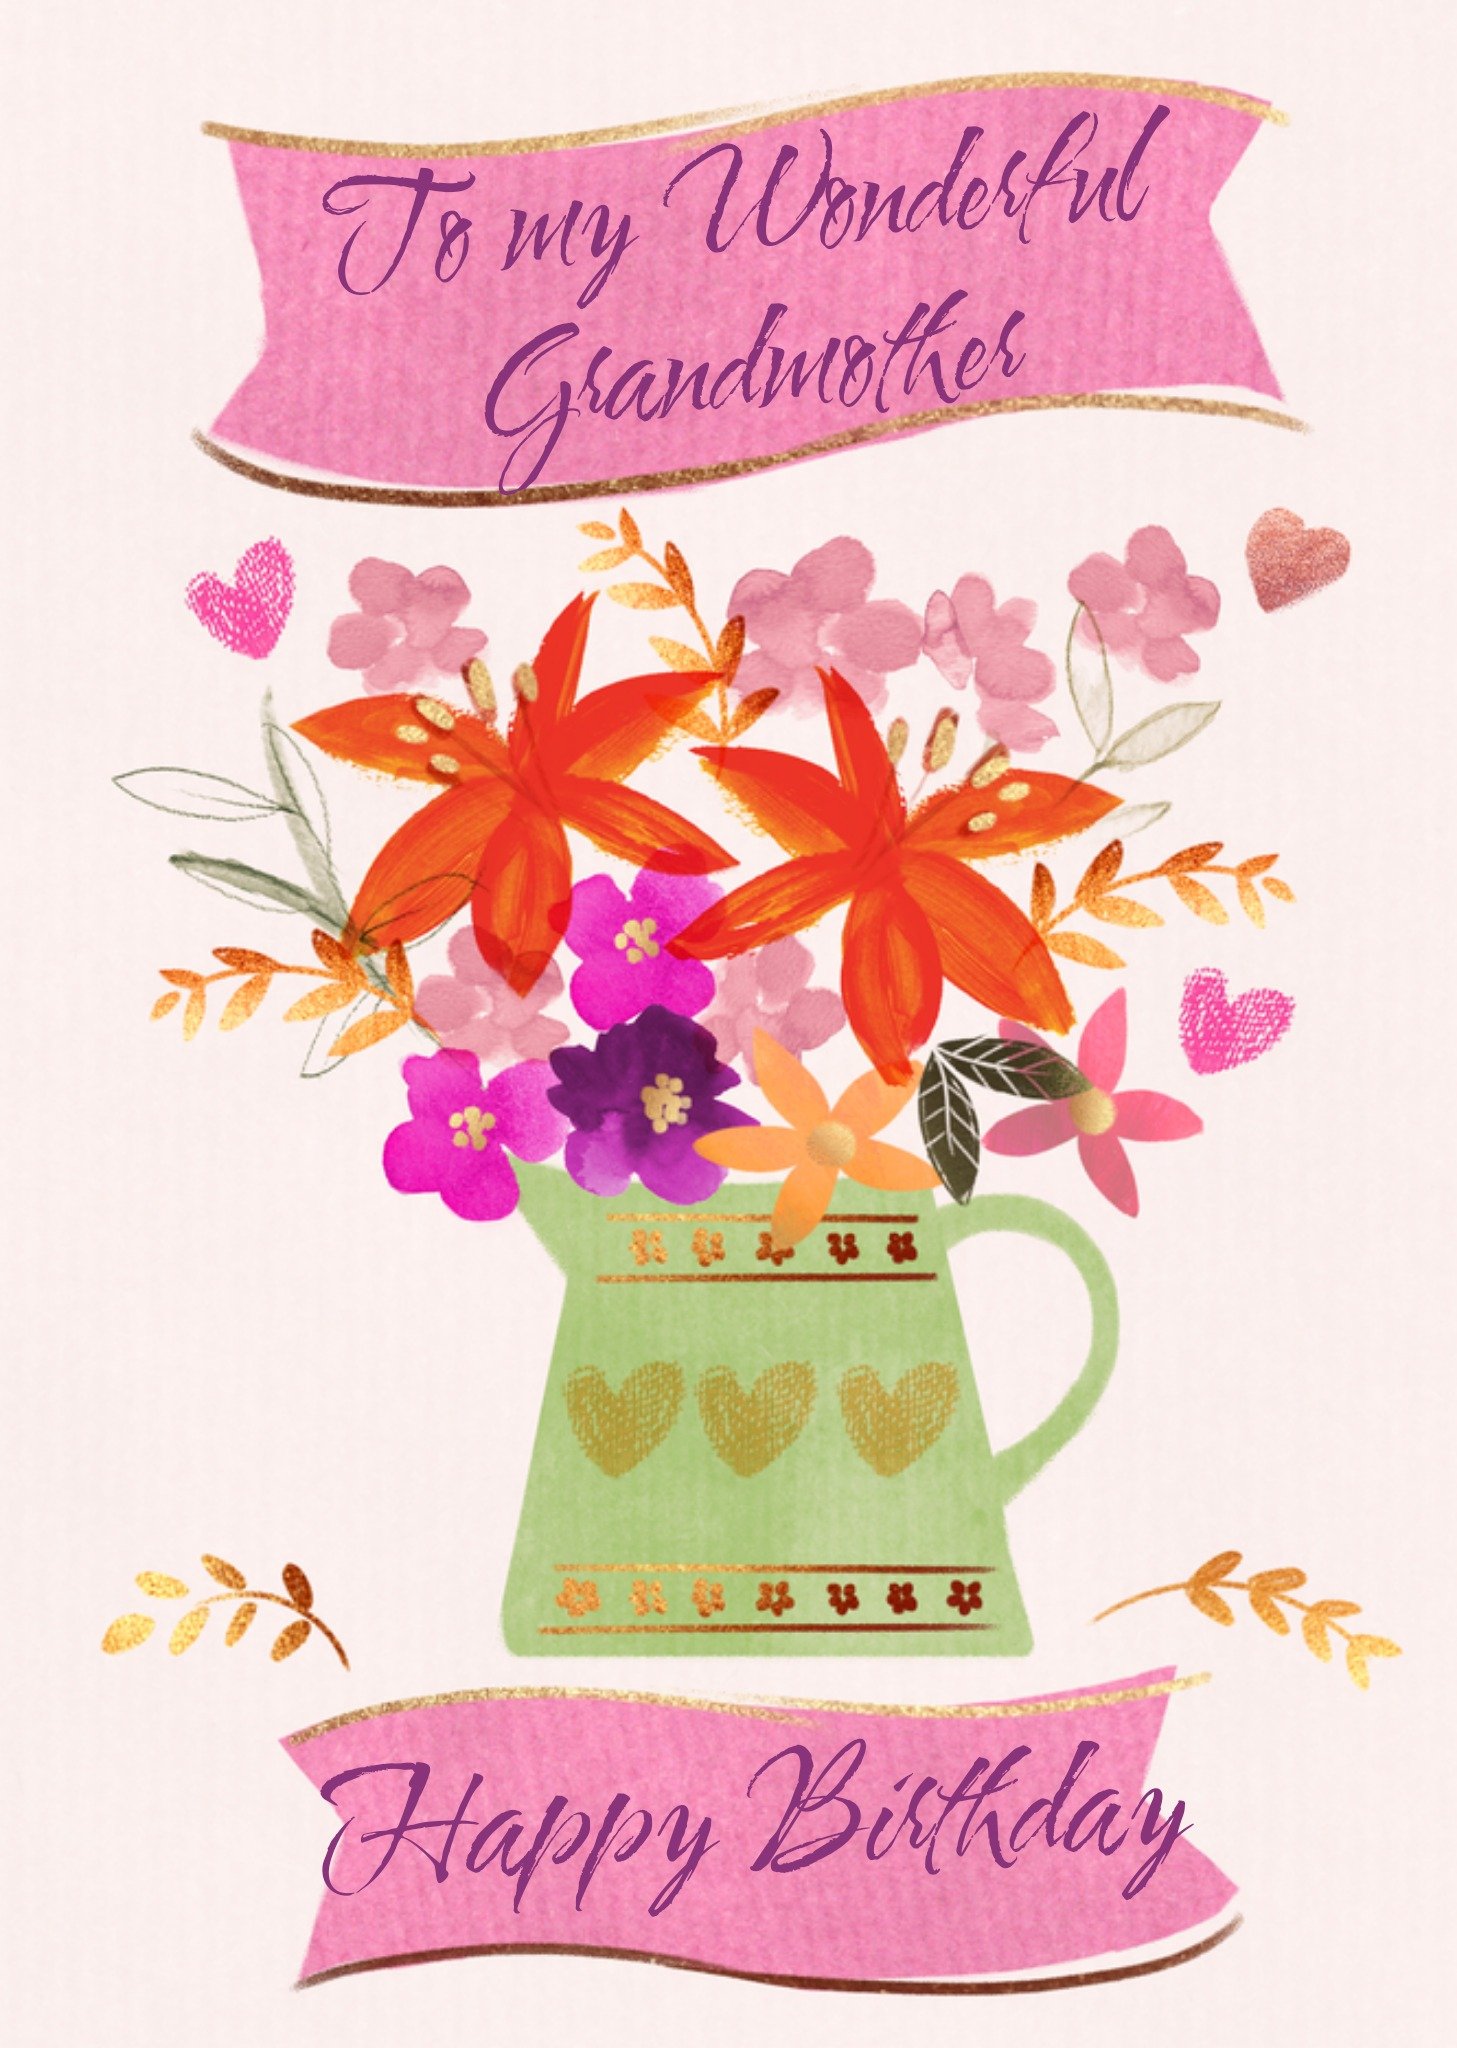 Moonpig Rustic Flowers In Jug Illustration Wonderful Grandmother Birthday Card Ecard